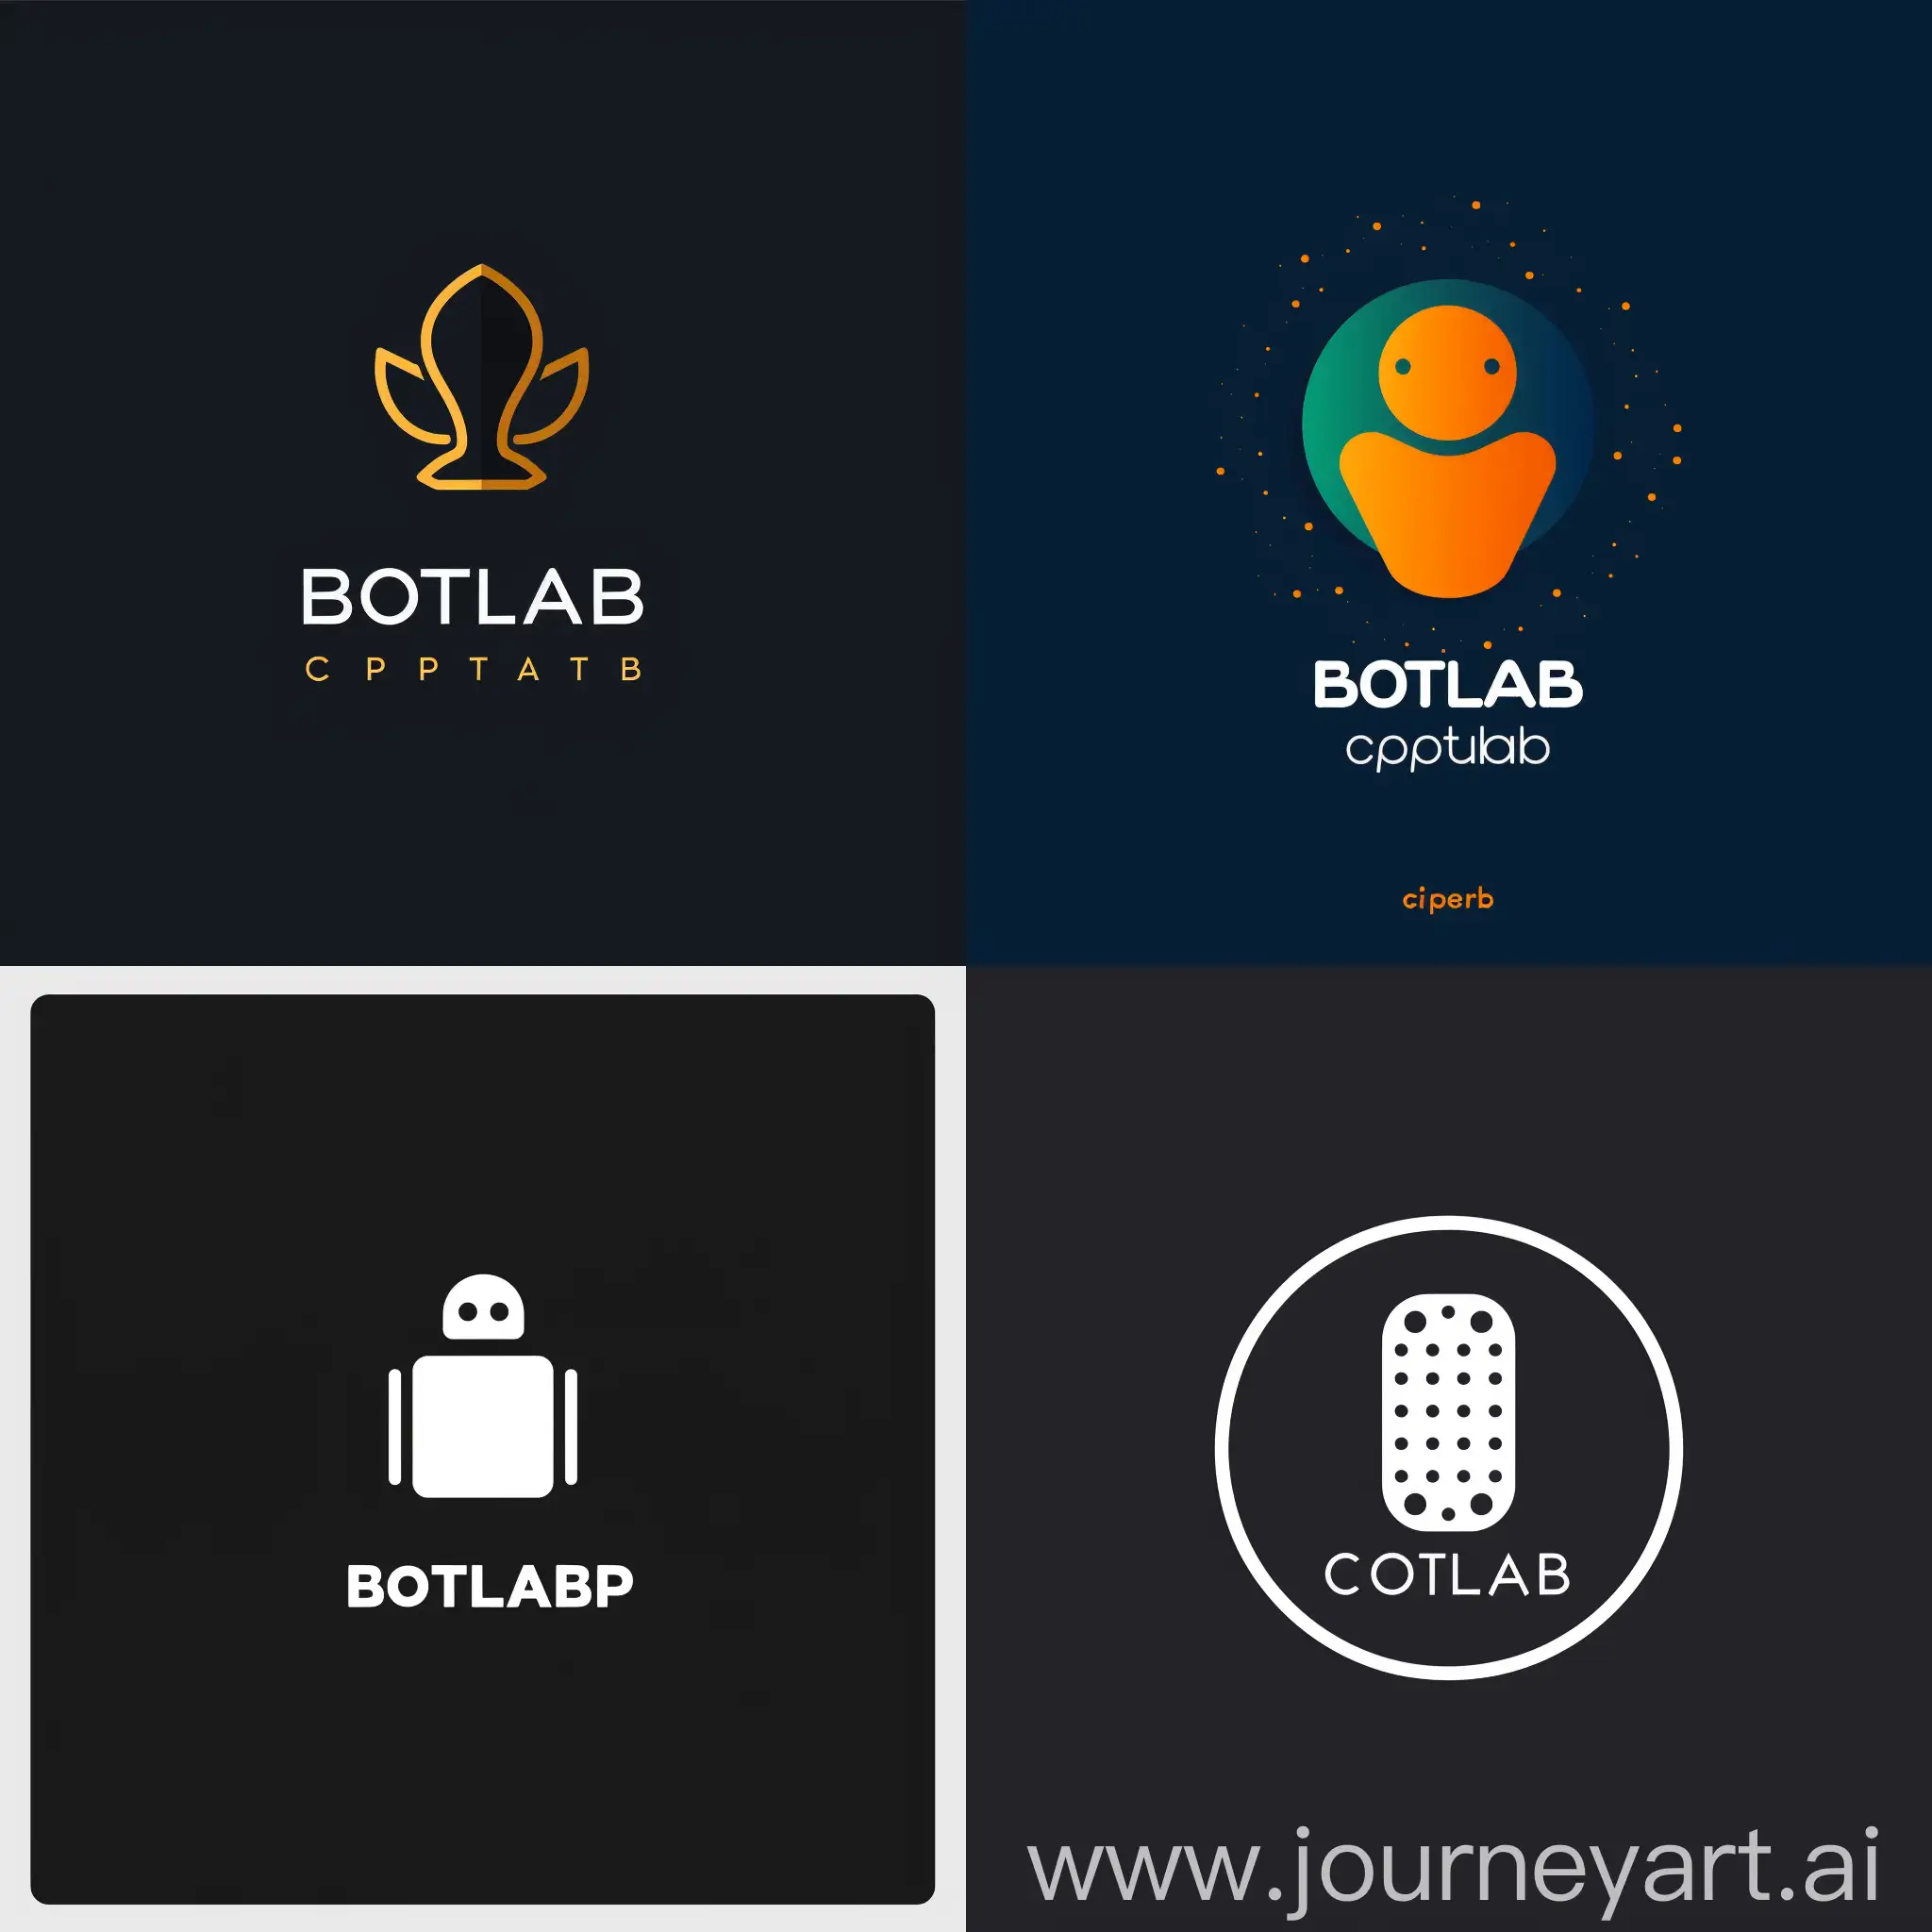 create logo for captcha. Slogan "BotLab". Logo must be minimalistic design